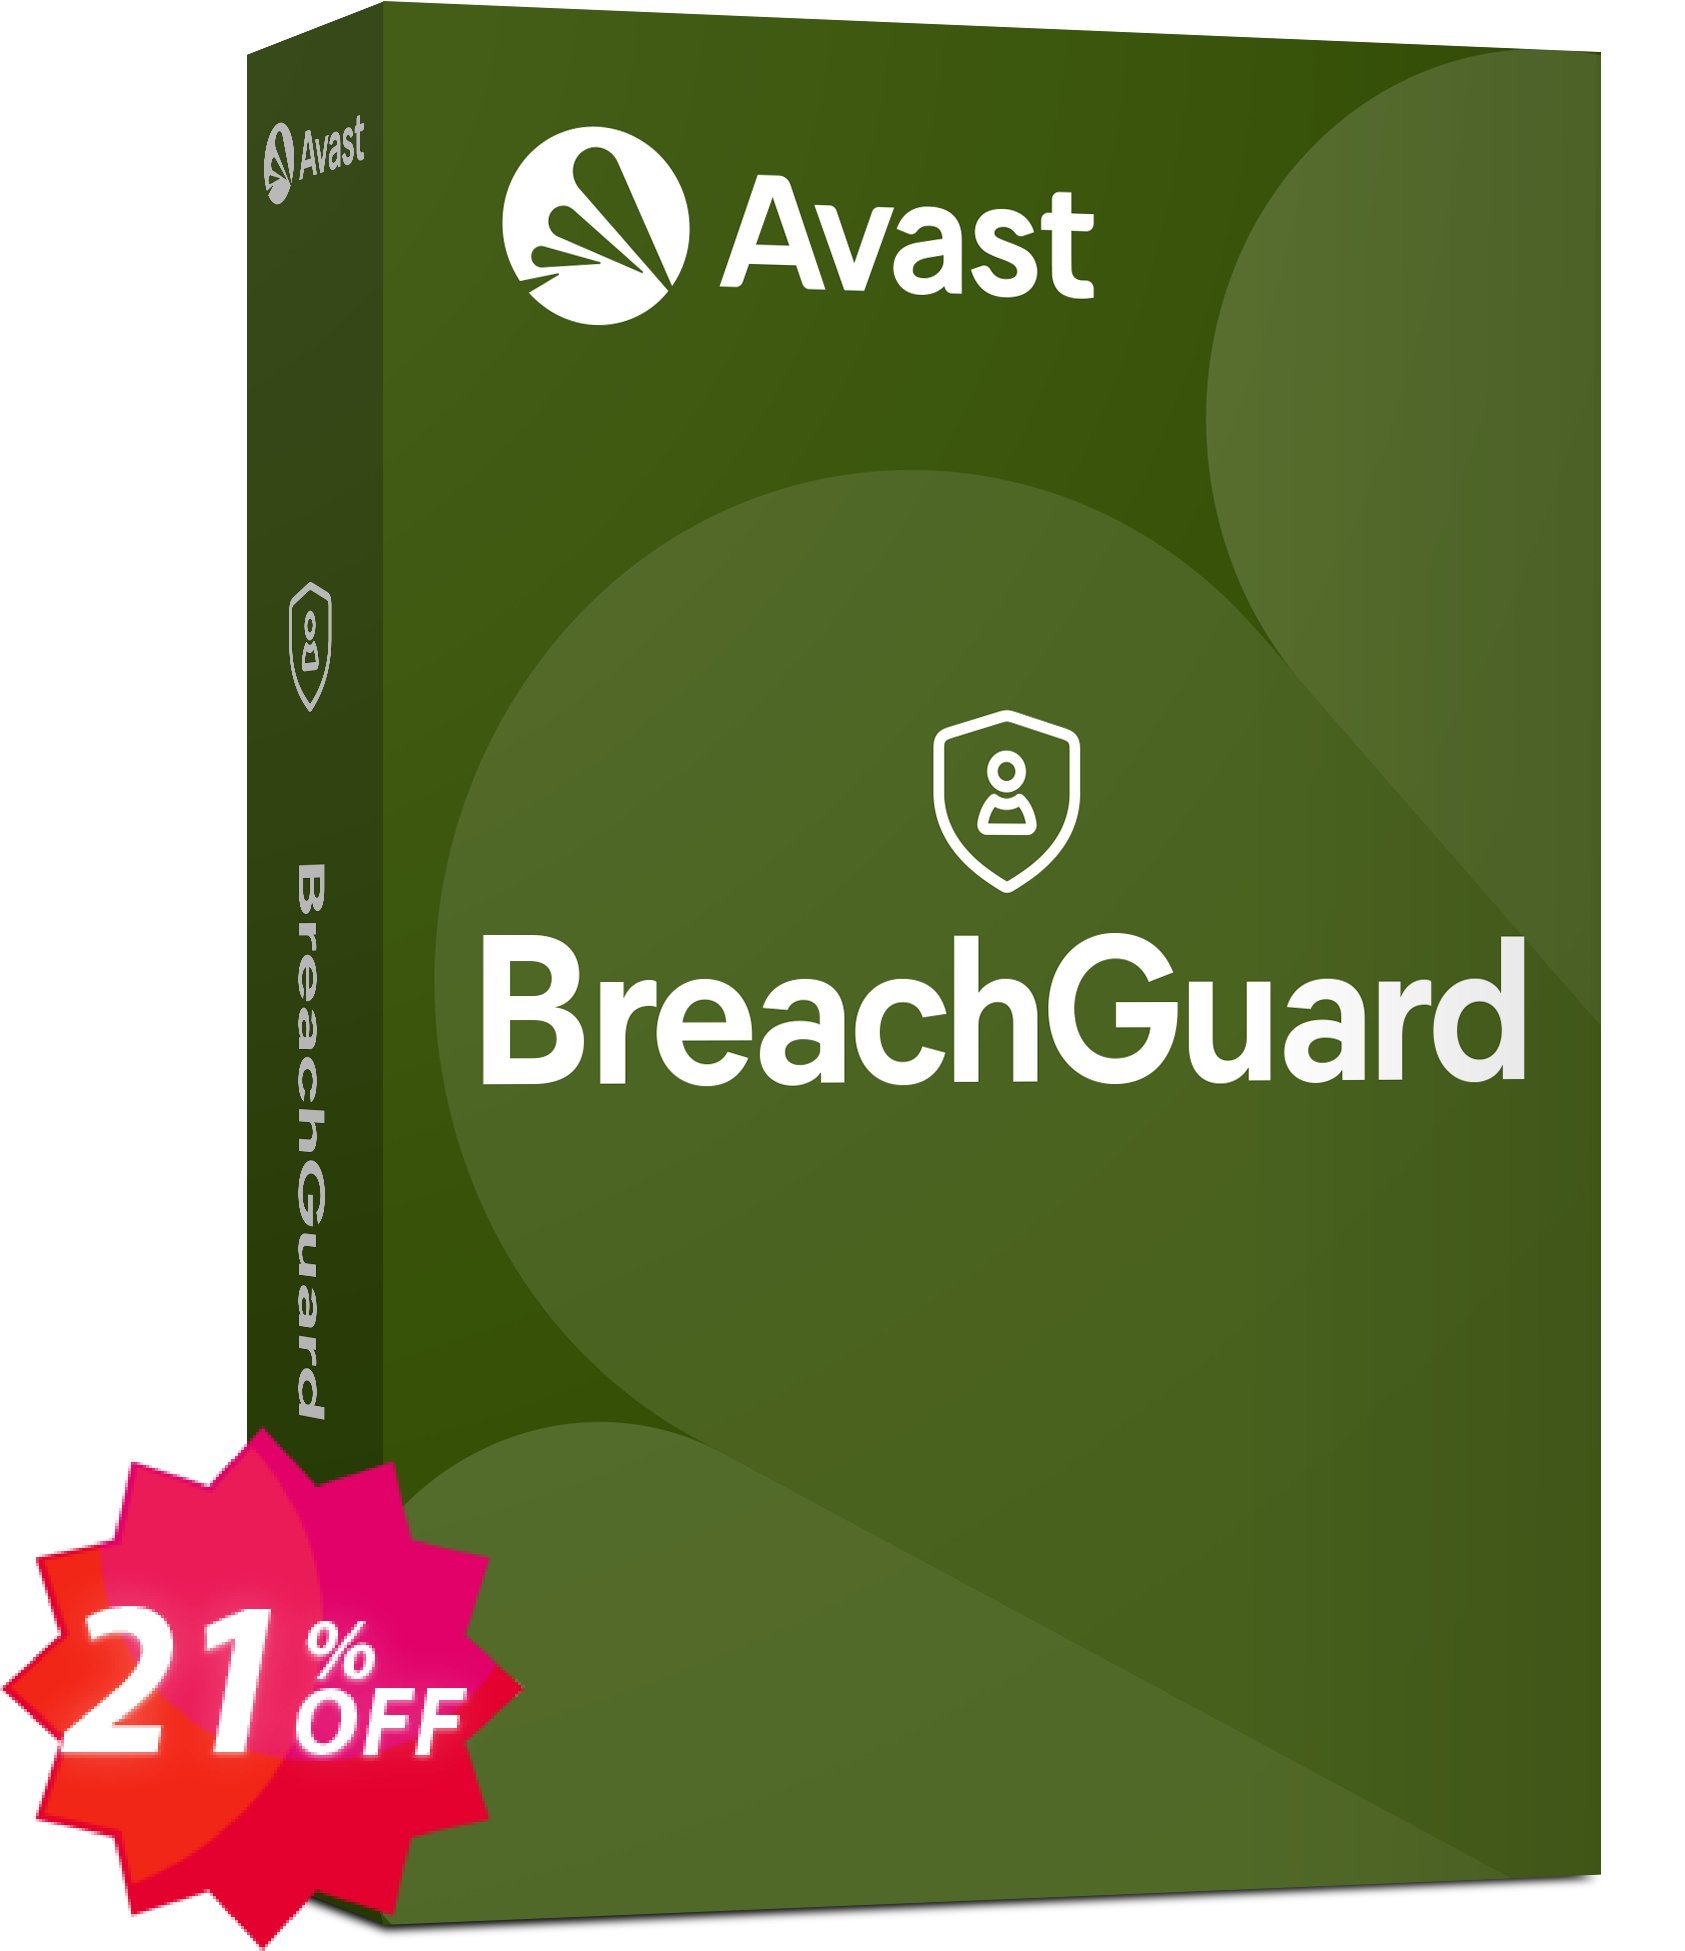 Avast BreachGuard Coupon code 21% discount 